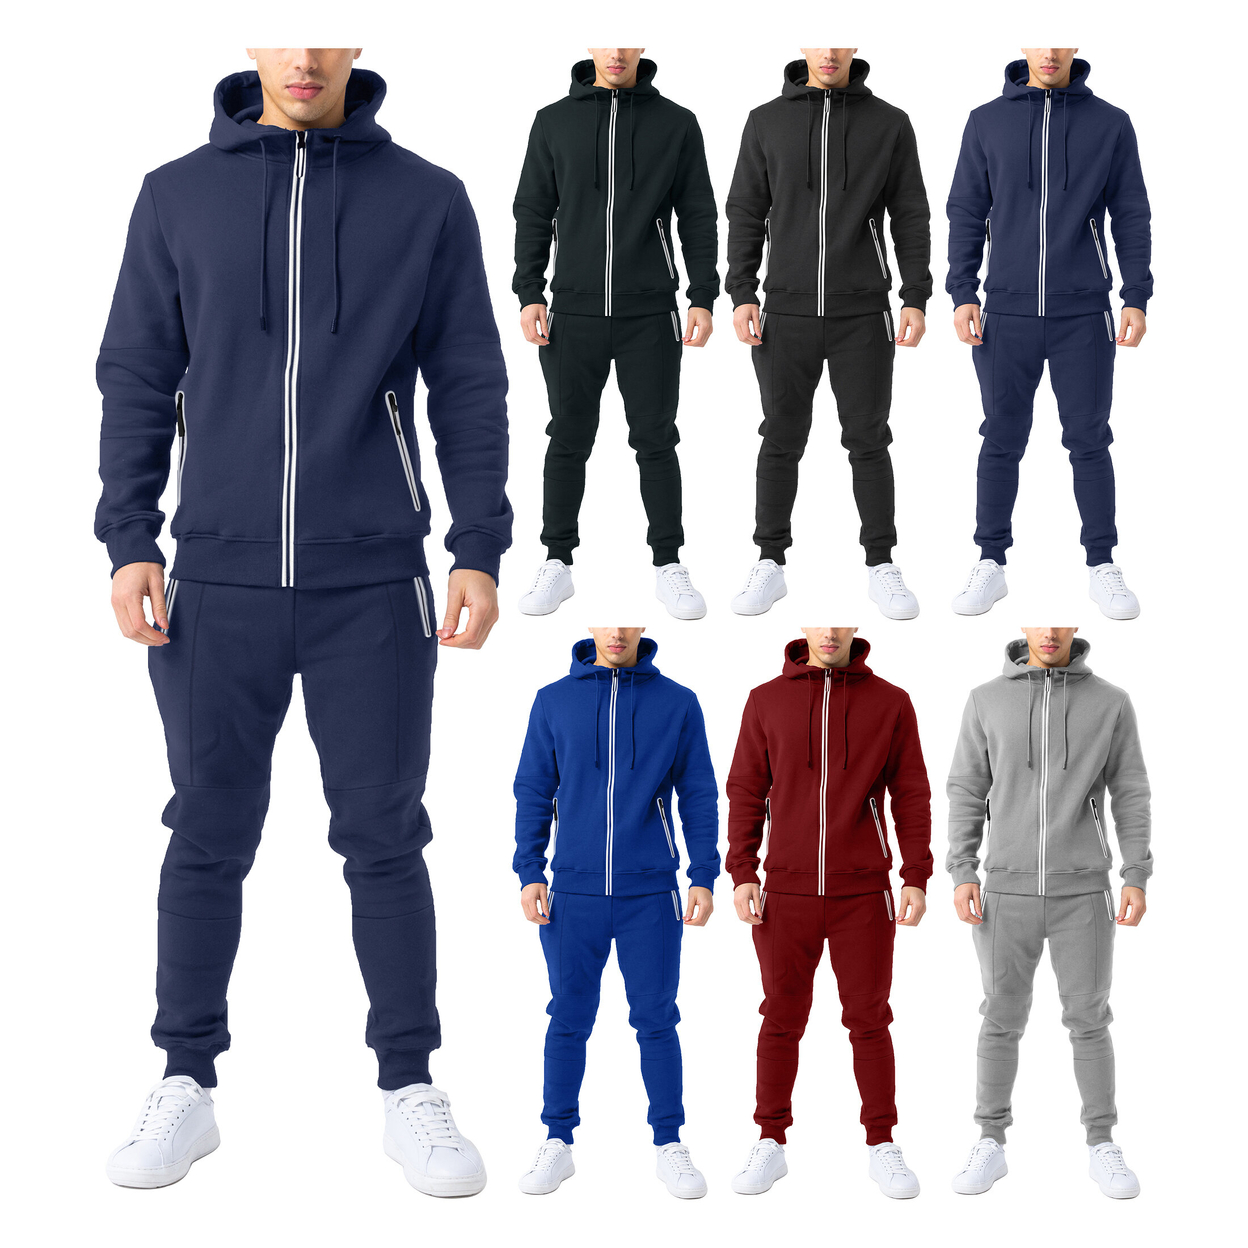 2-Pack: Men's Cozy Slim Fit Active Athletic Full Zip Hoodie And Jogger Tracksuit - Black & Blue, Medium